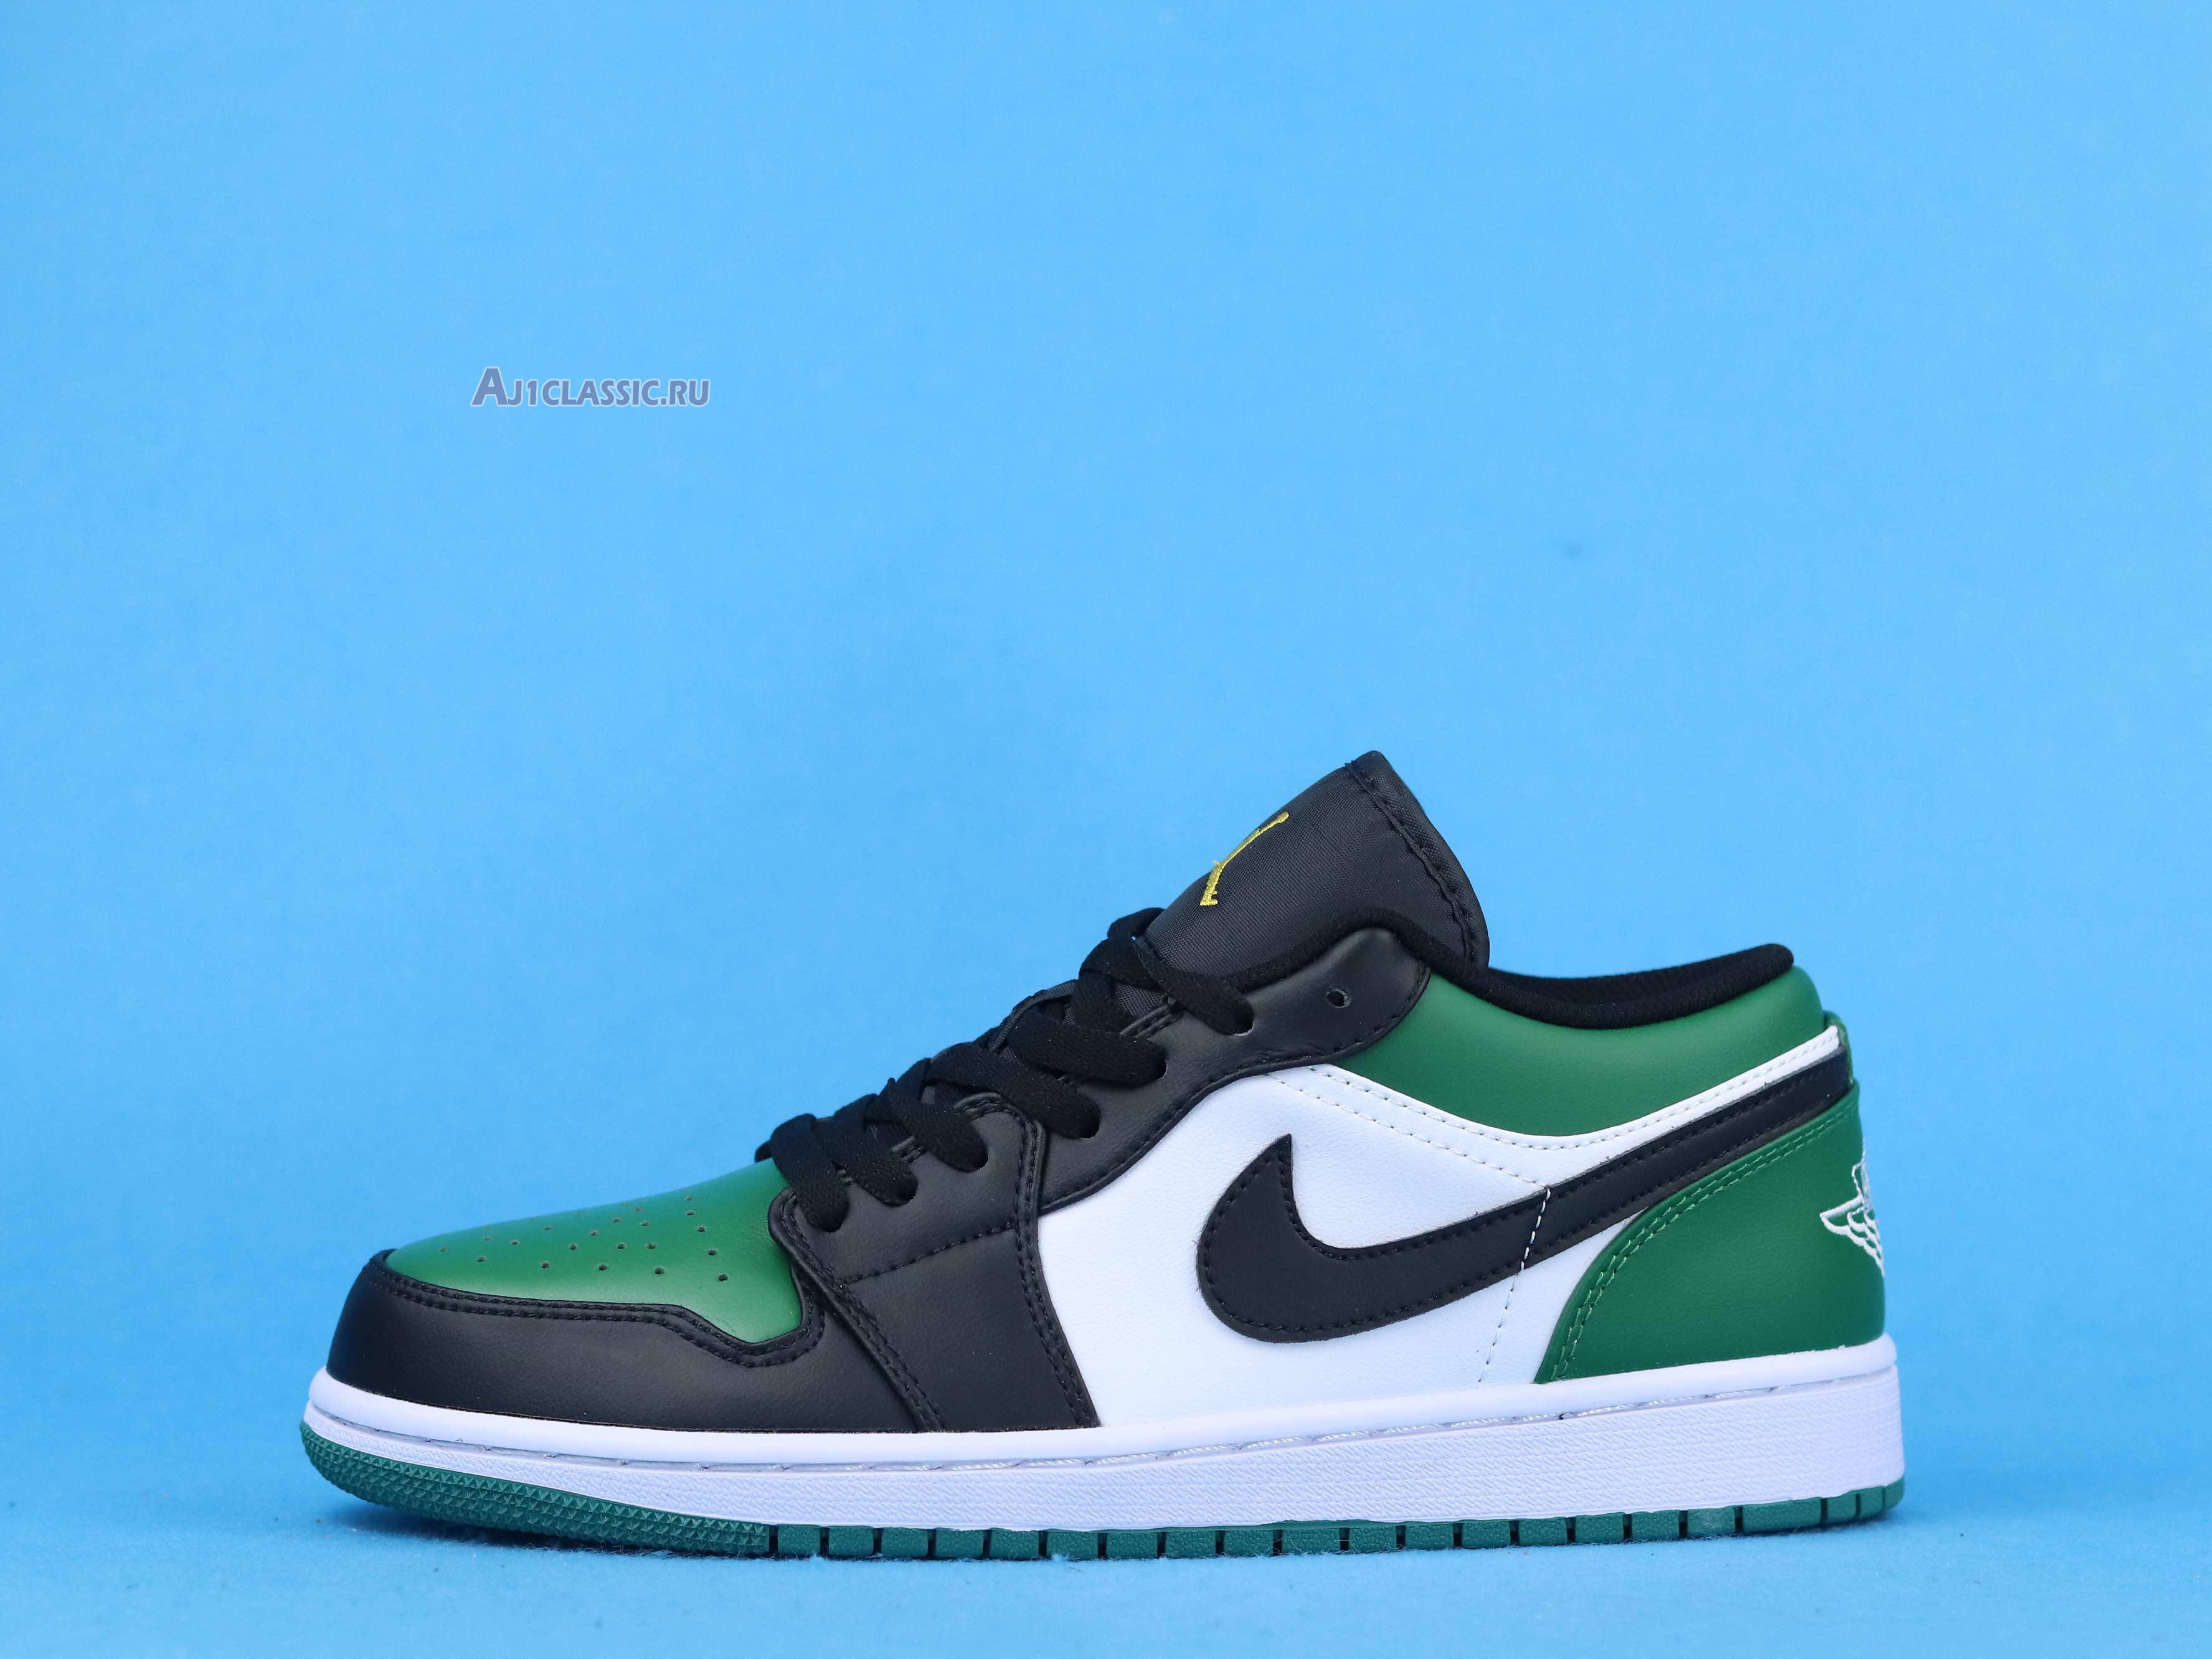 Air Jordan 1 Low Green Toe 553558-371 Noble Green/Pollen/White/Black Sneakers